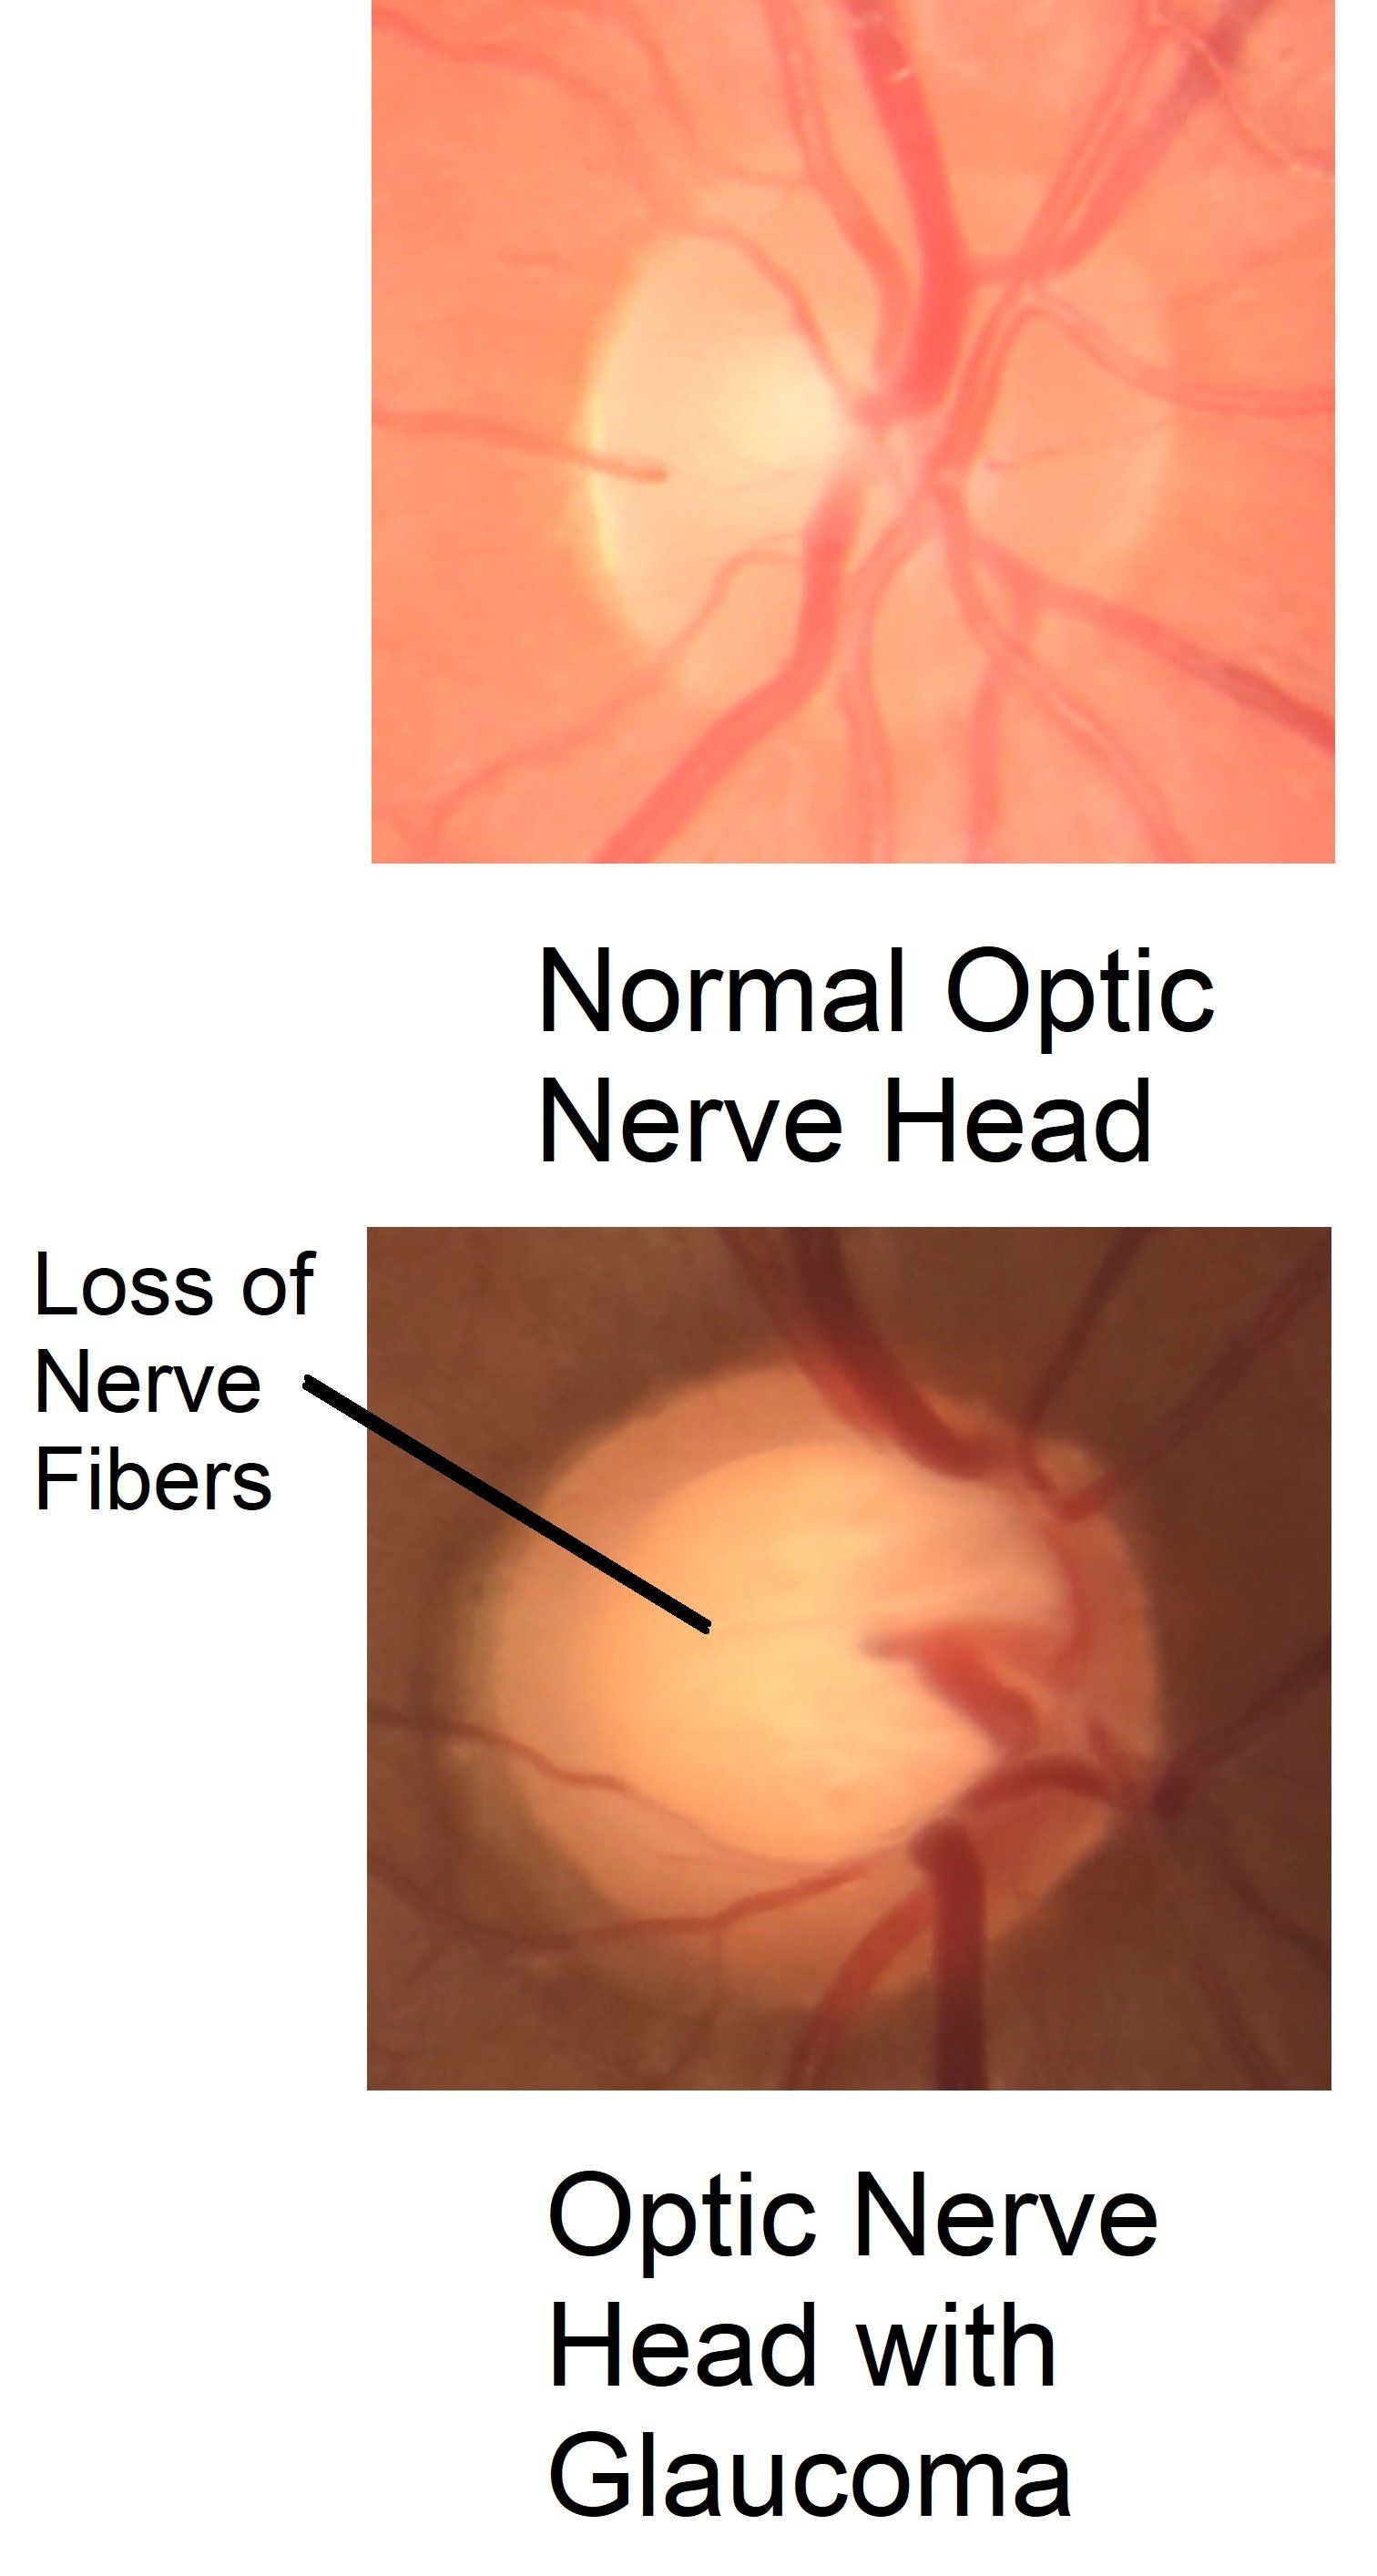 Optic Nerve Head with Glaucoma